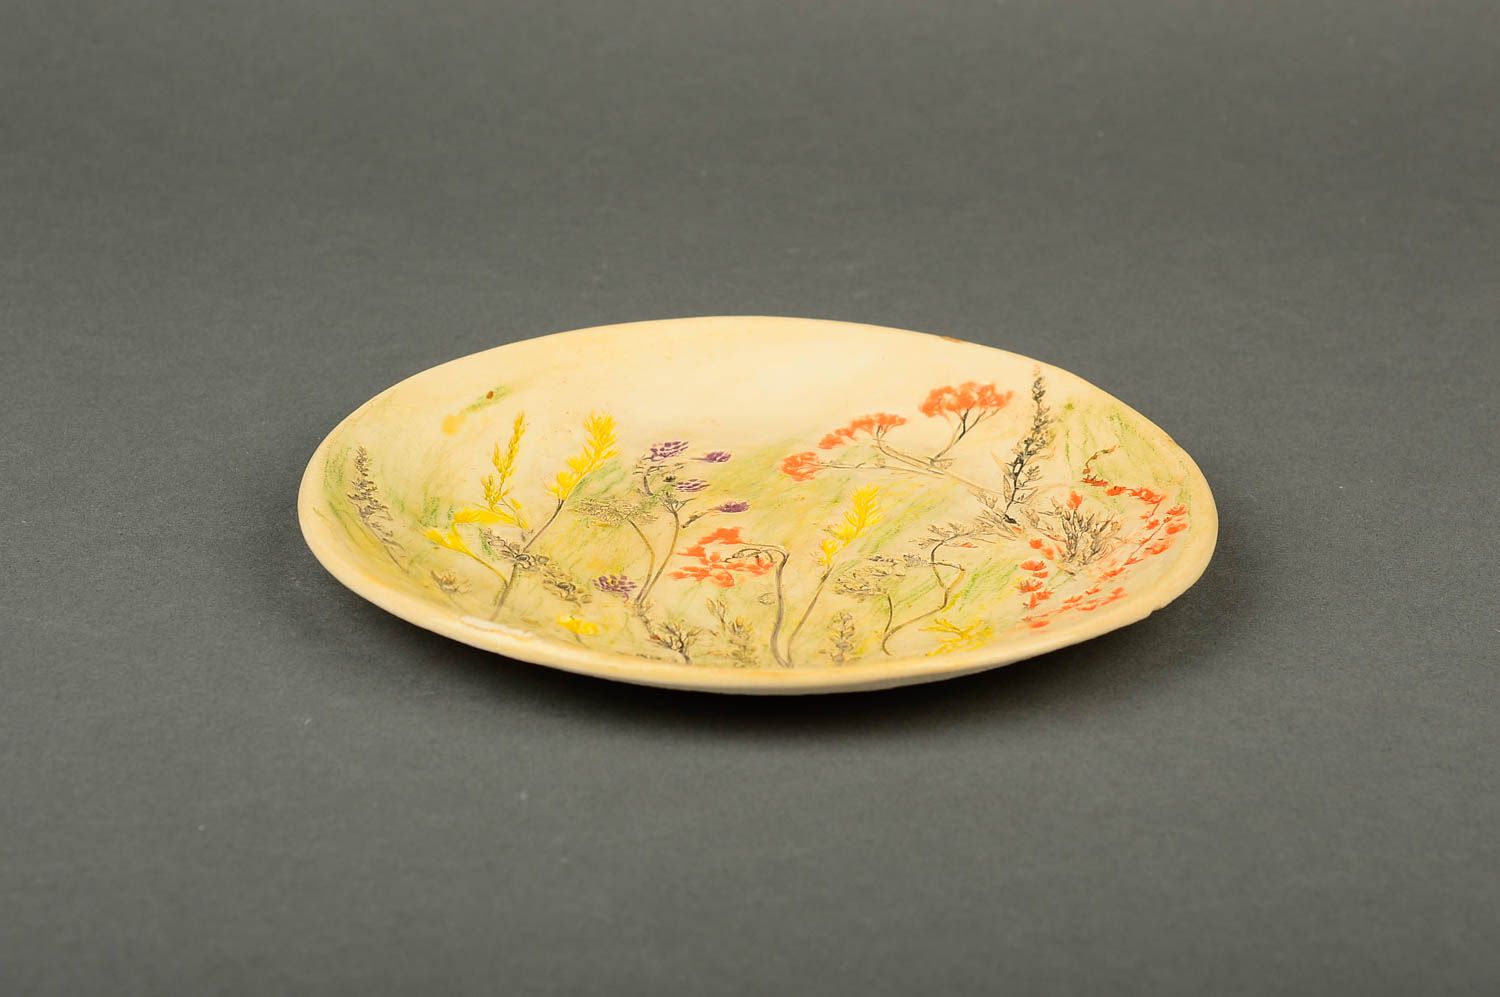 Beautiful handmade ceramic plate kitchen supplies unusual tableware ideas photo 3